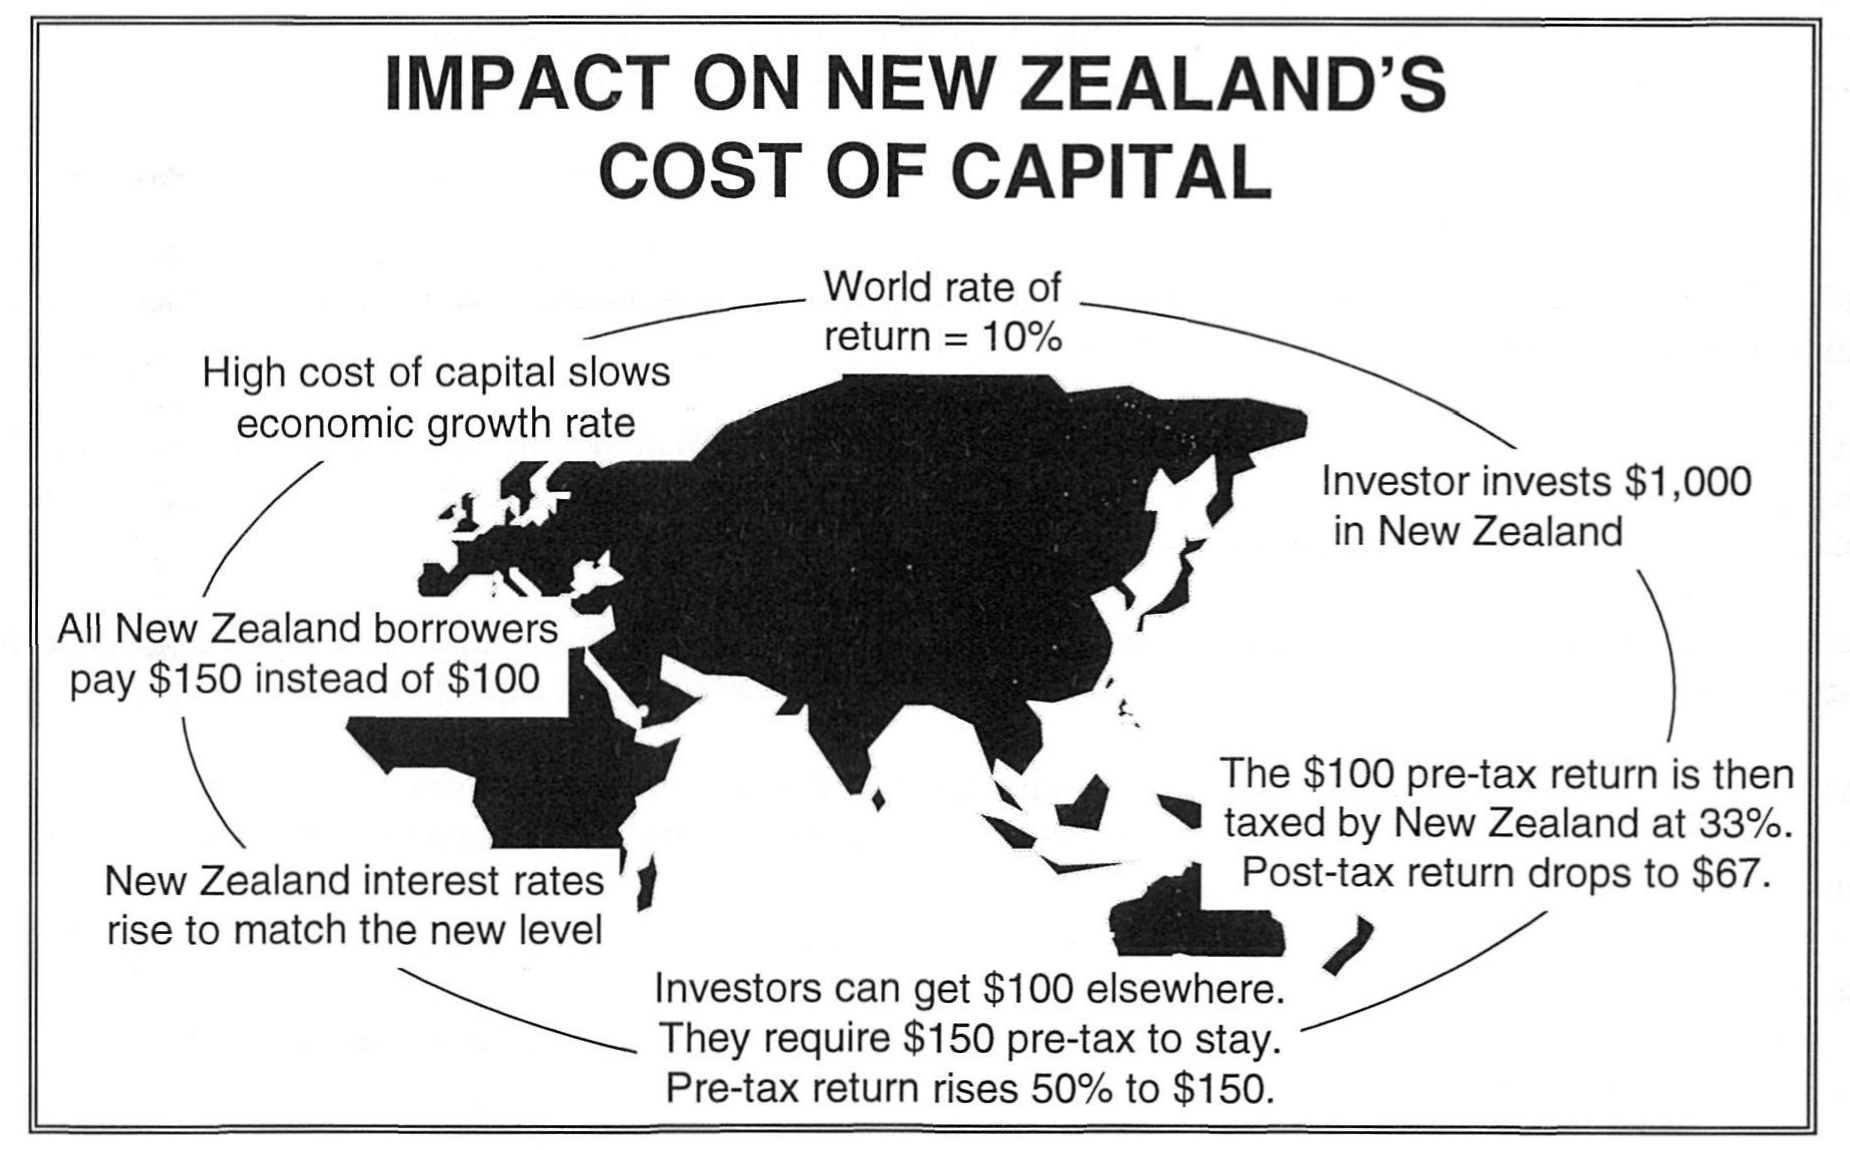 Figure 3: Impact on New Zealand's cost of capital